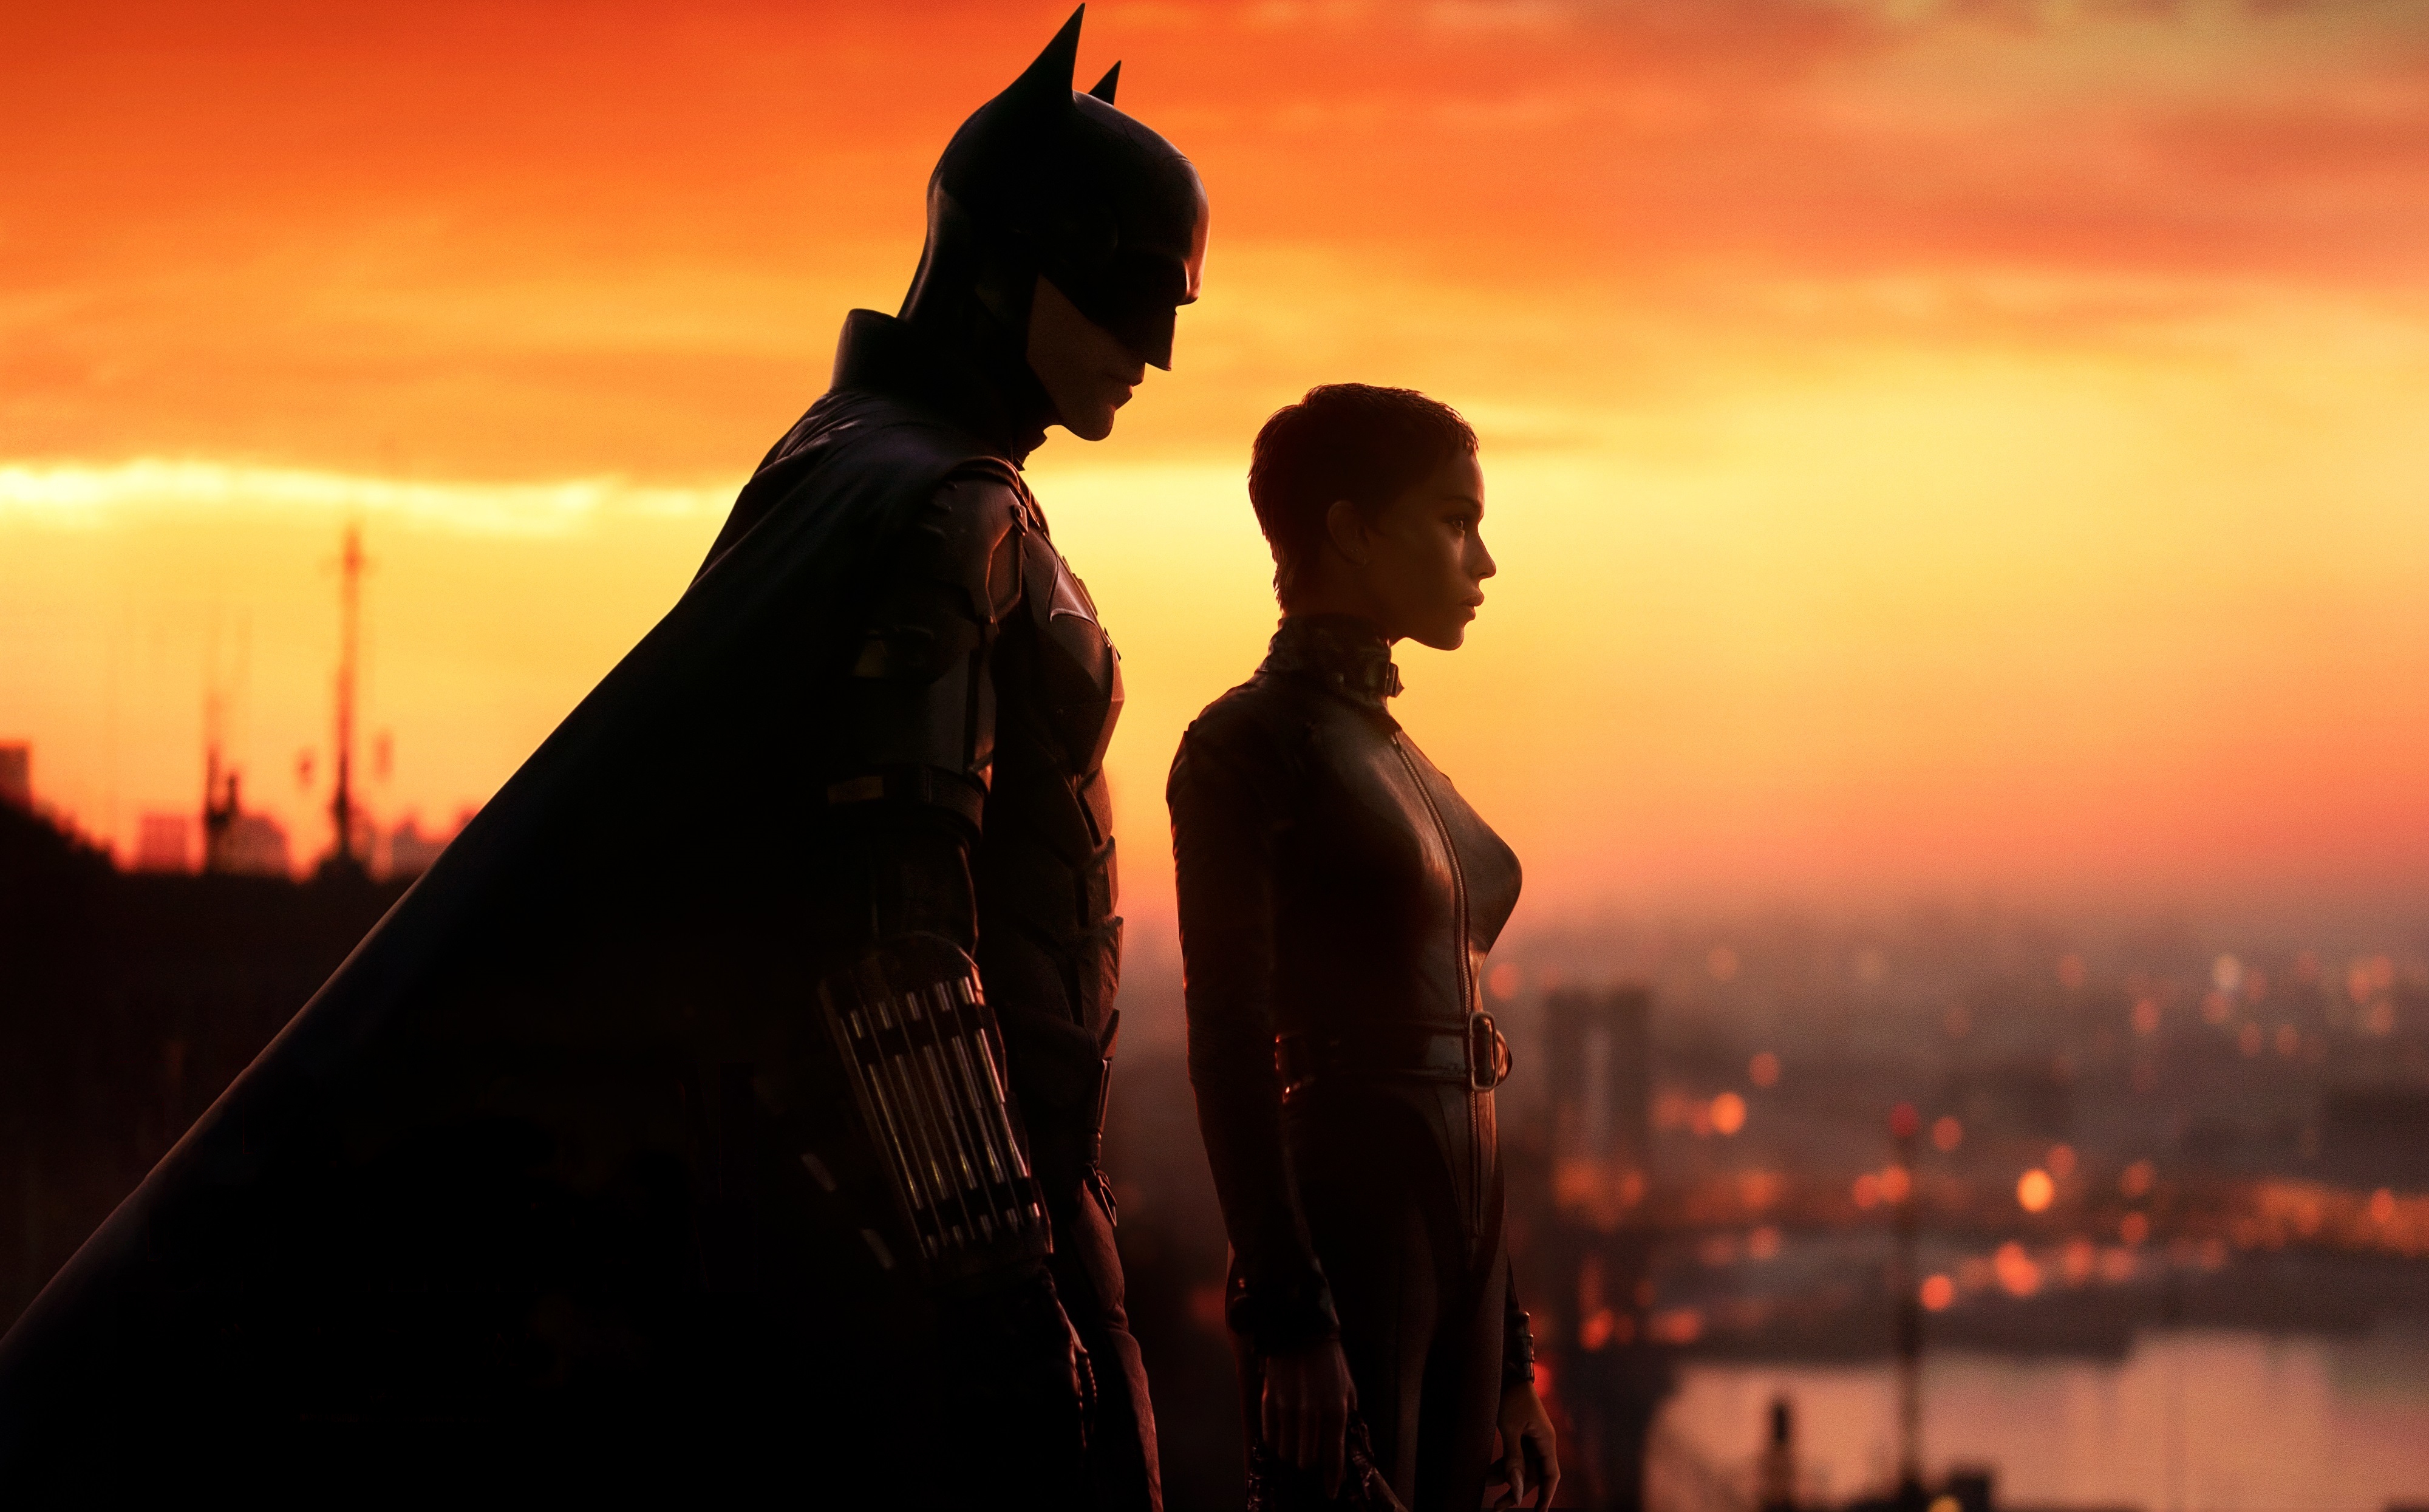 People 4000x2490 Batman Catwoman DC Comics film stills depth of field Robert Pattinson Zoë Kravitz The Batman (2022) women men sunset